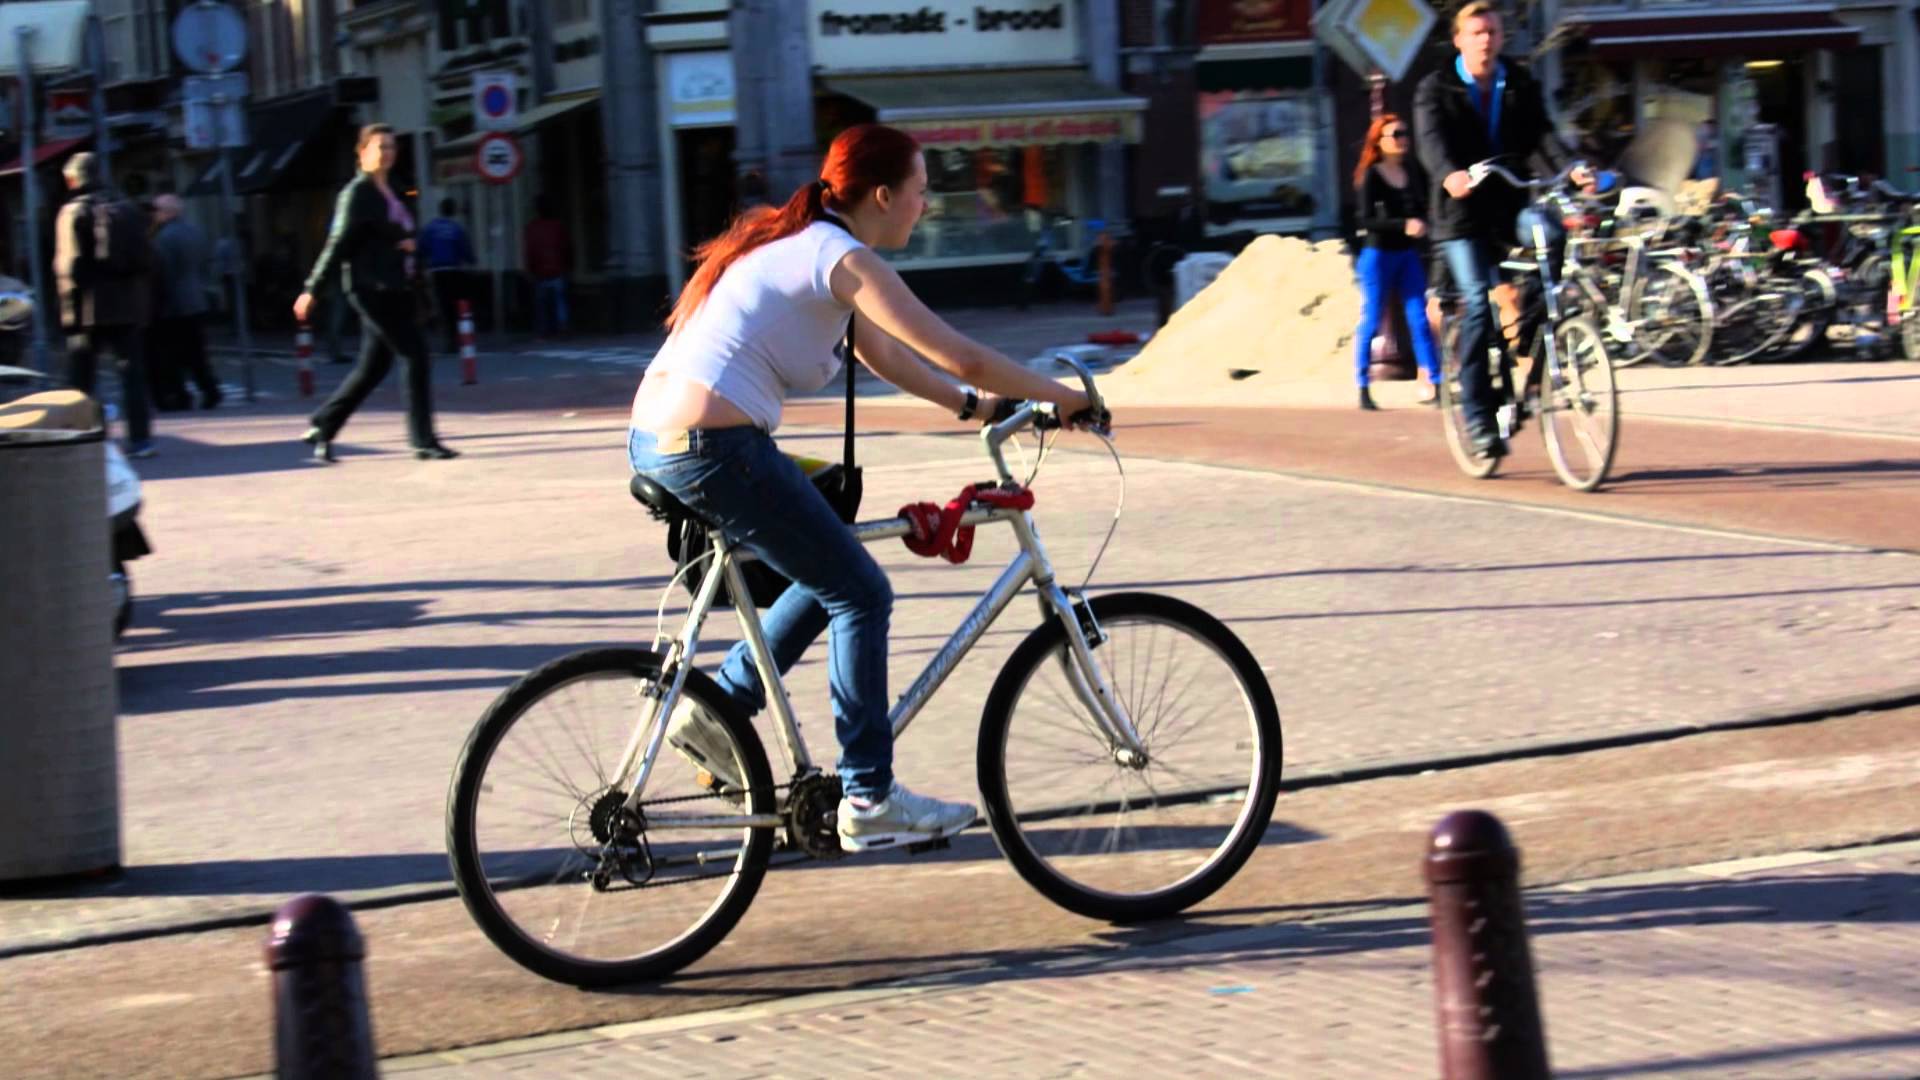 Bikes in Holland - TravelMovies - YouTube